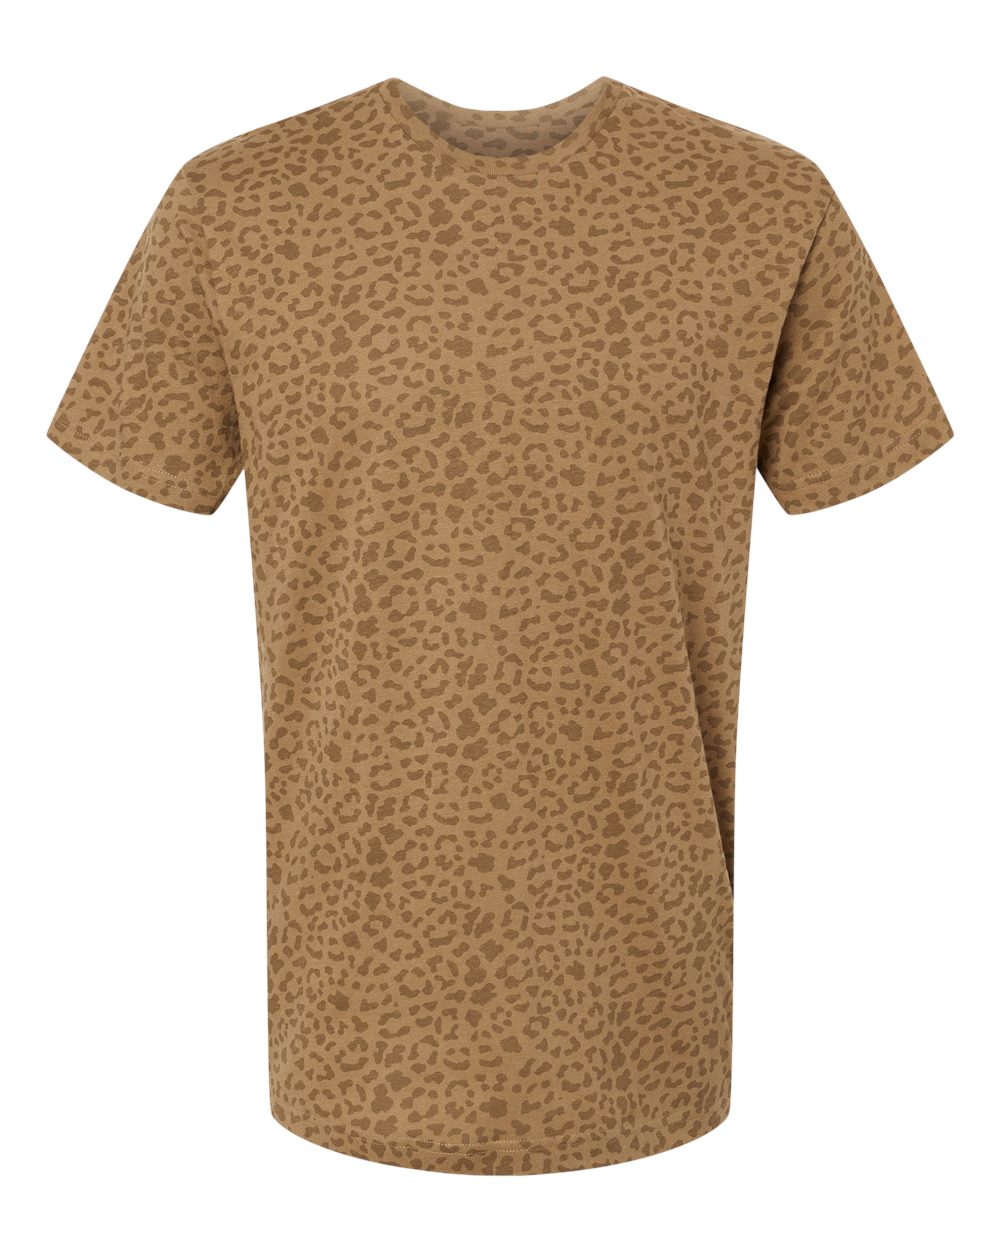 Leopard - Blank T-Shirt